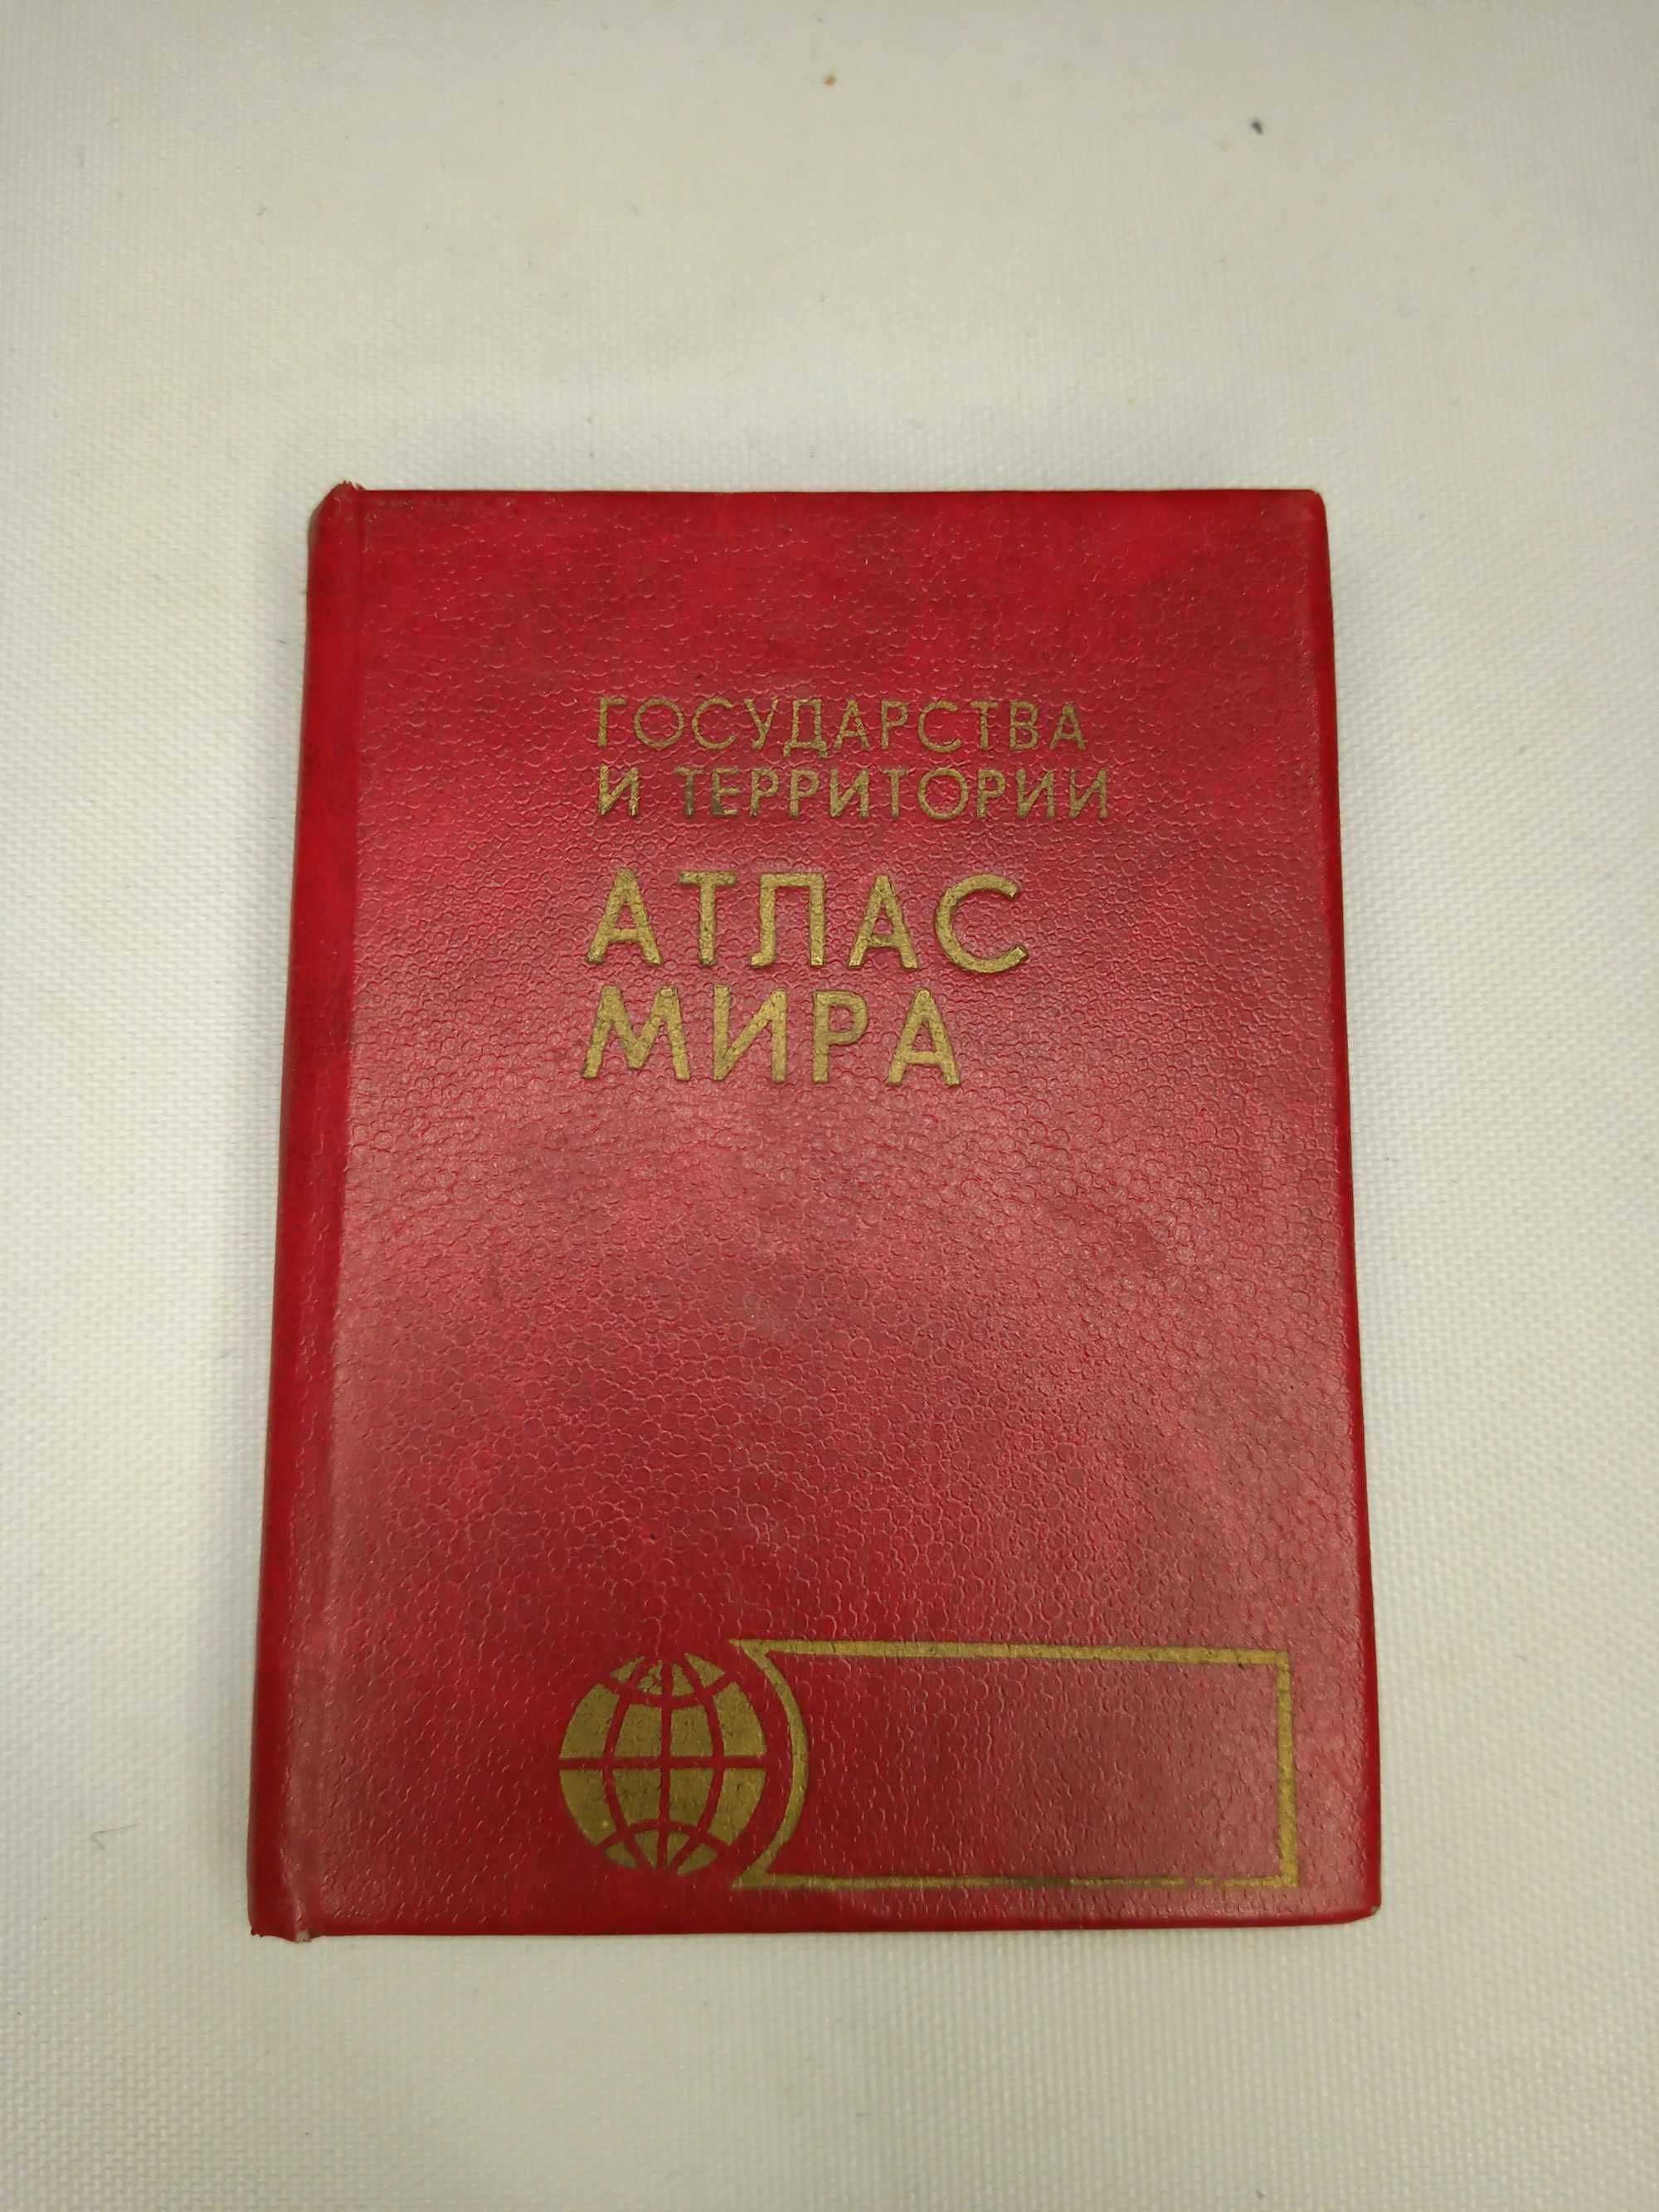 Mini Rosyjski Atlas Świata 1989 r.